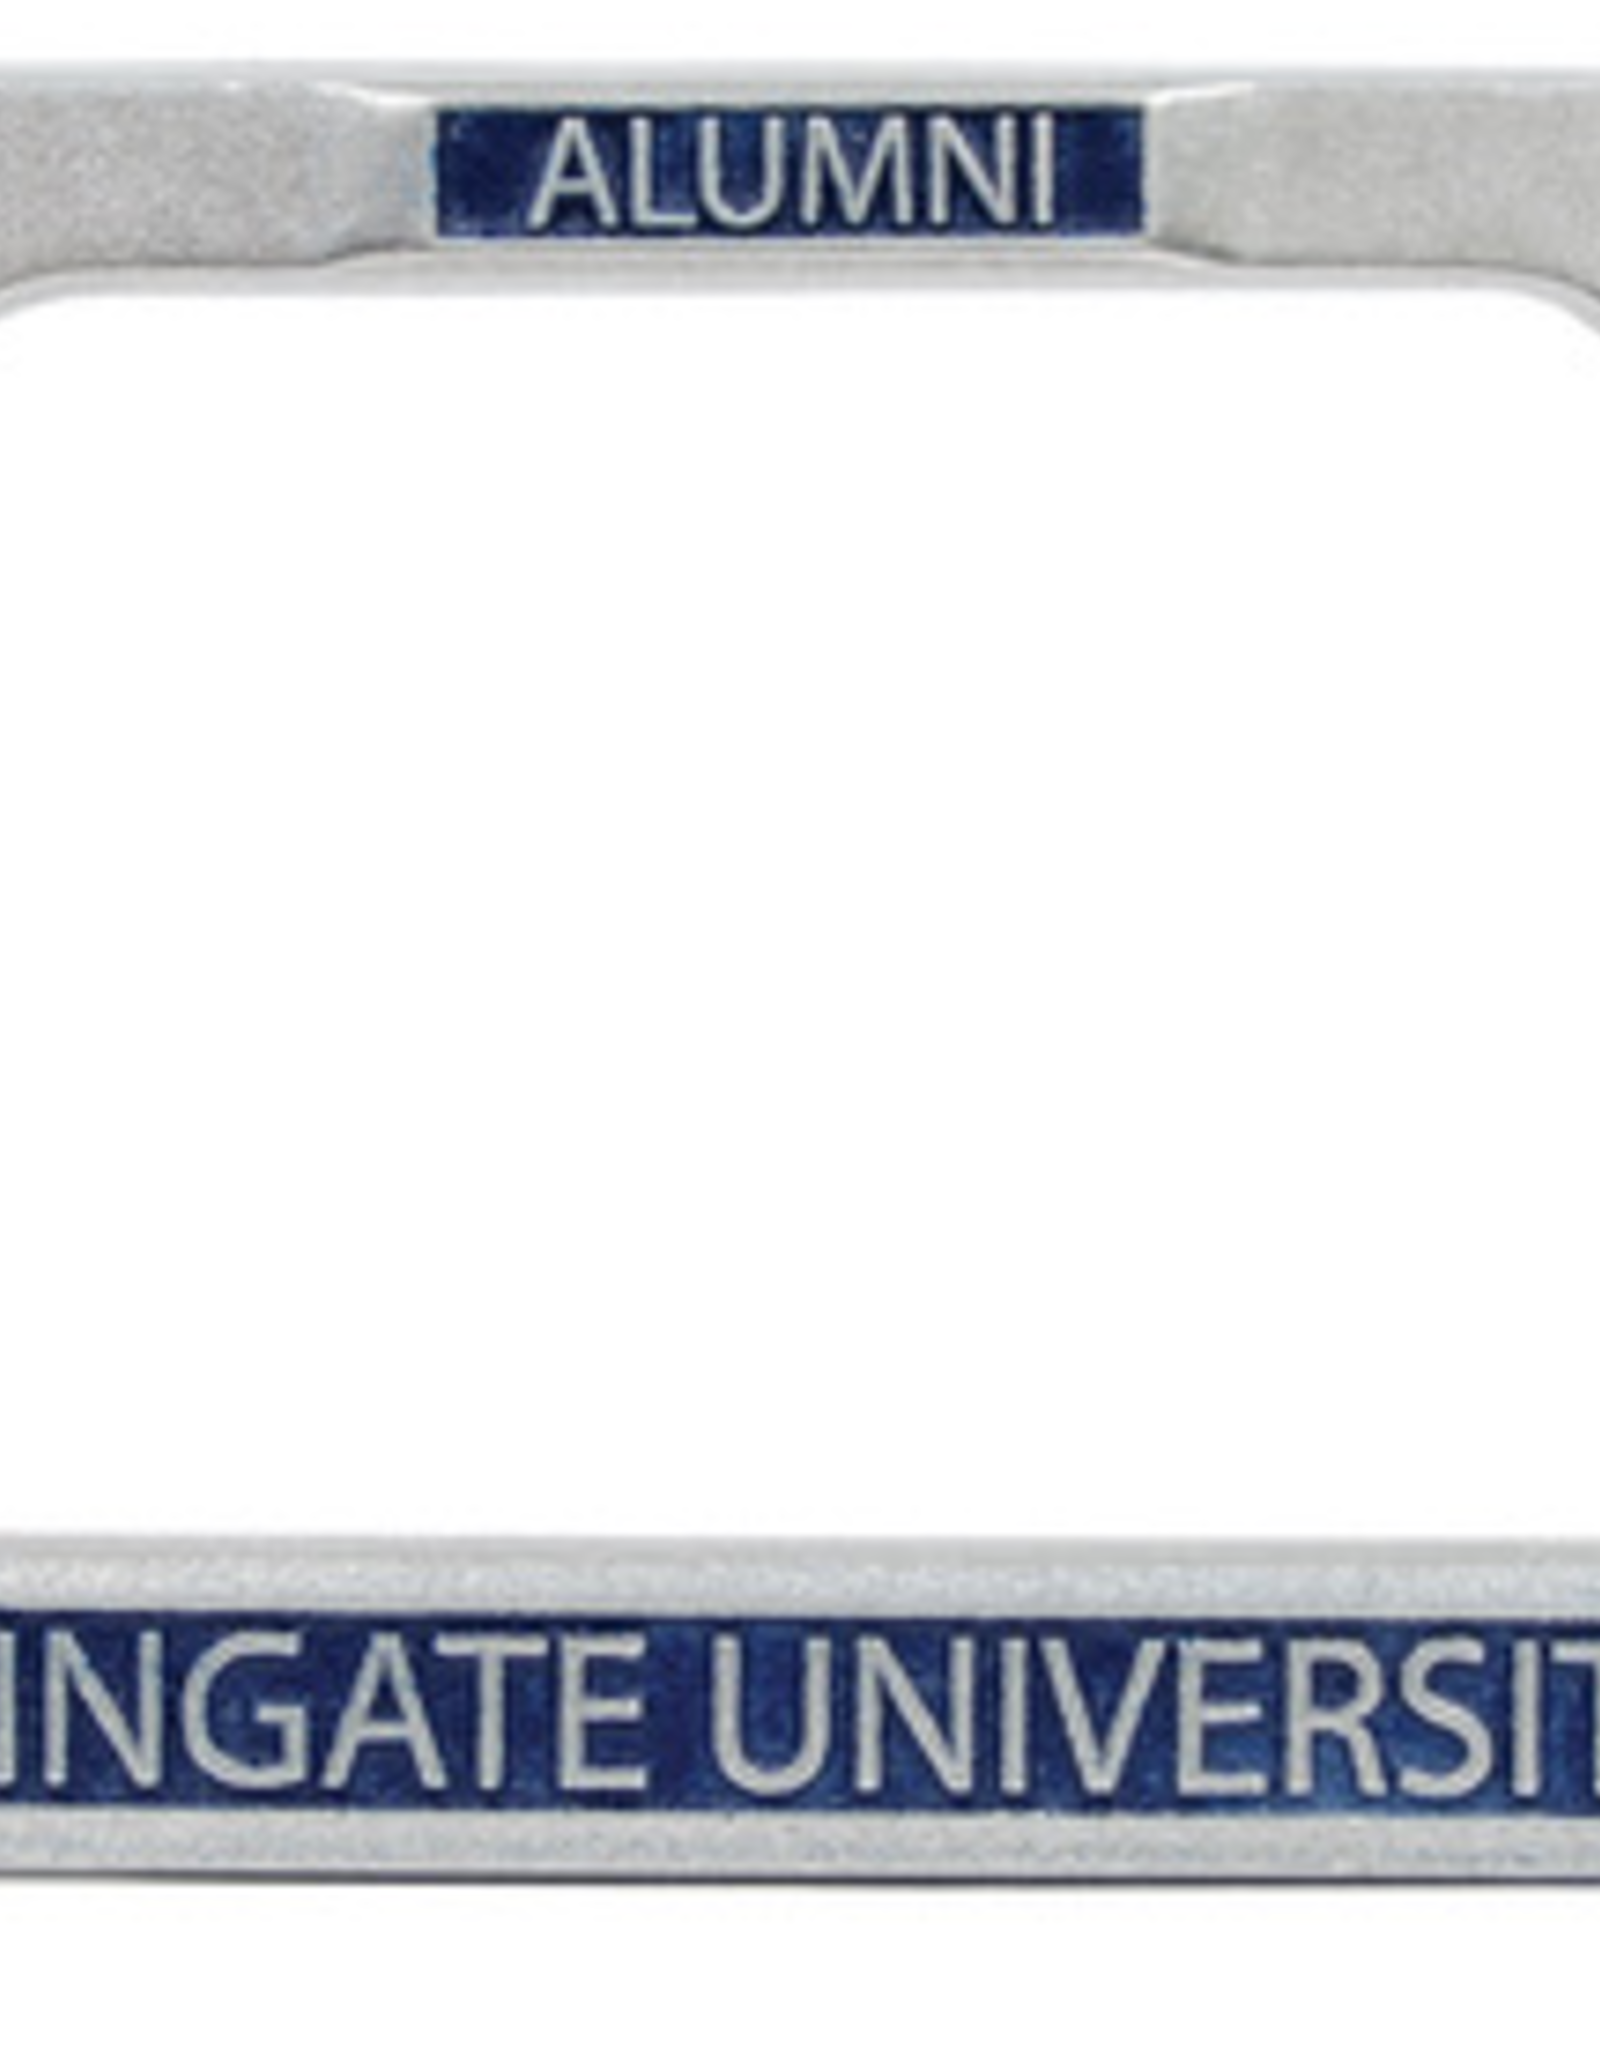 Jardine Wingate University Alumni License Plate Frame